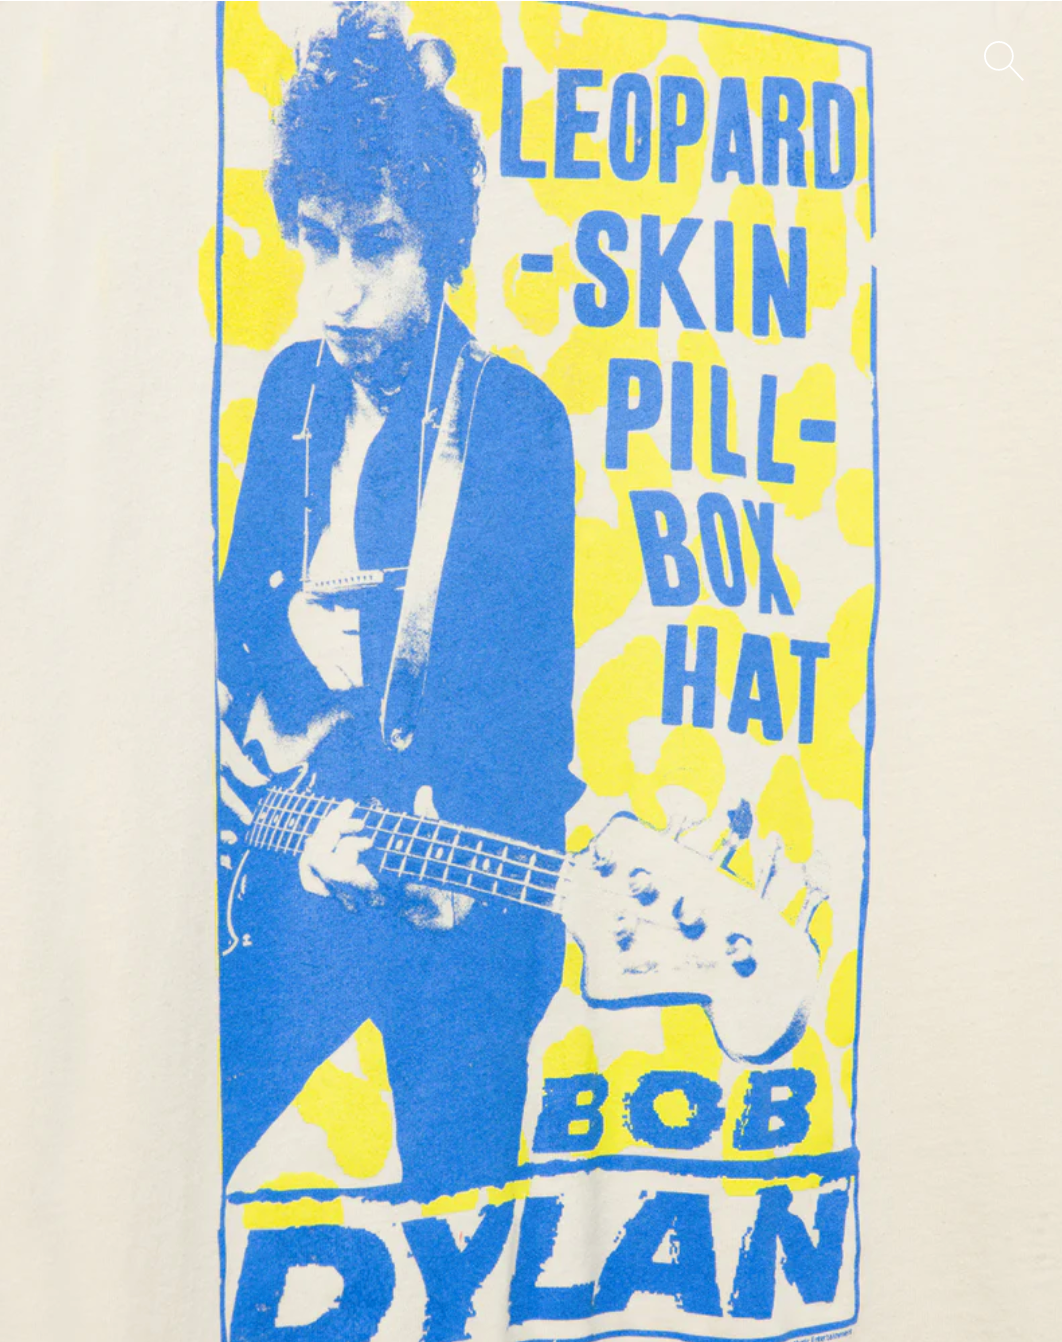 Junkfood-Clothing-Bob-Dylan-Leopard-Skin-Pill-Box-Hat-Tee-Graphic